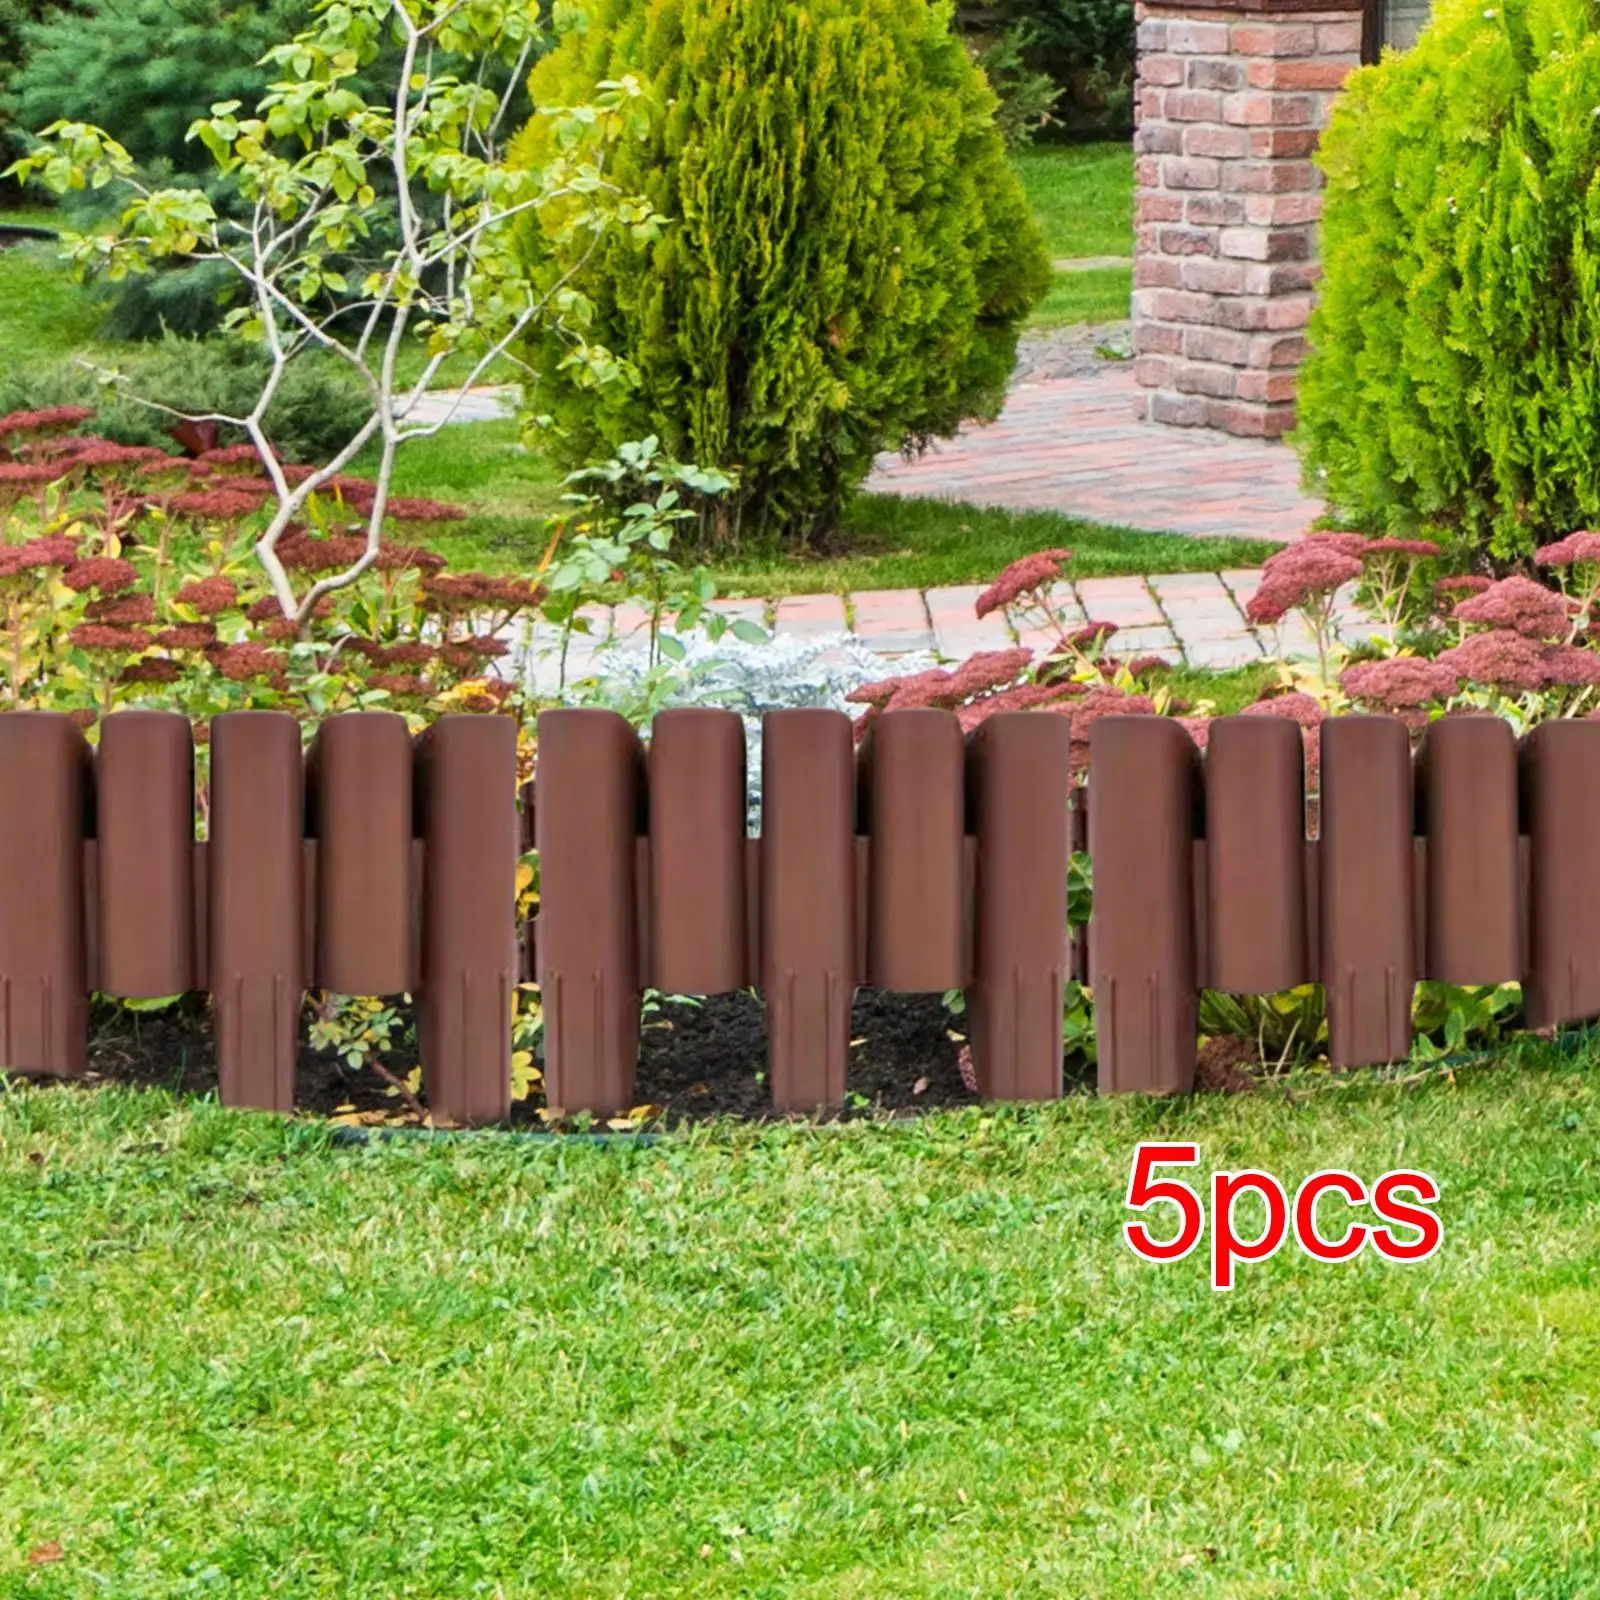 5 Pieces Garden Edging Border Landscape Border Flexible Yard Plant Durable Fence Liner for Garden Flower Bed Path Lawn Patio